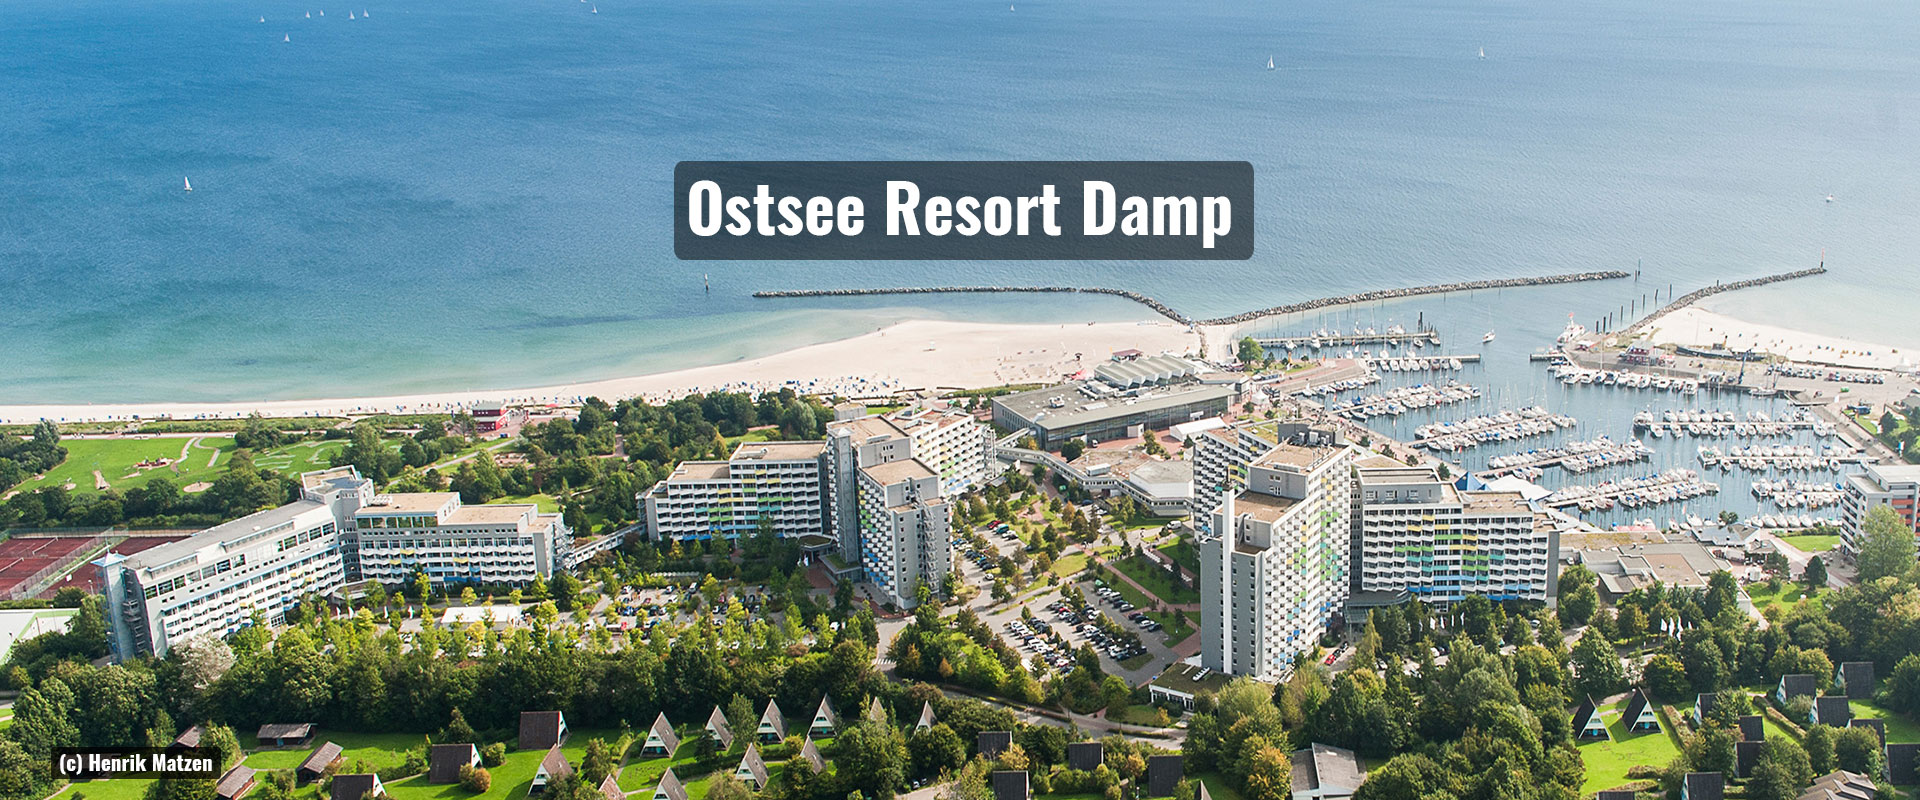 Ostsee Resort Damp